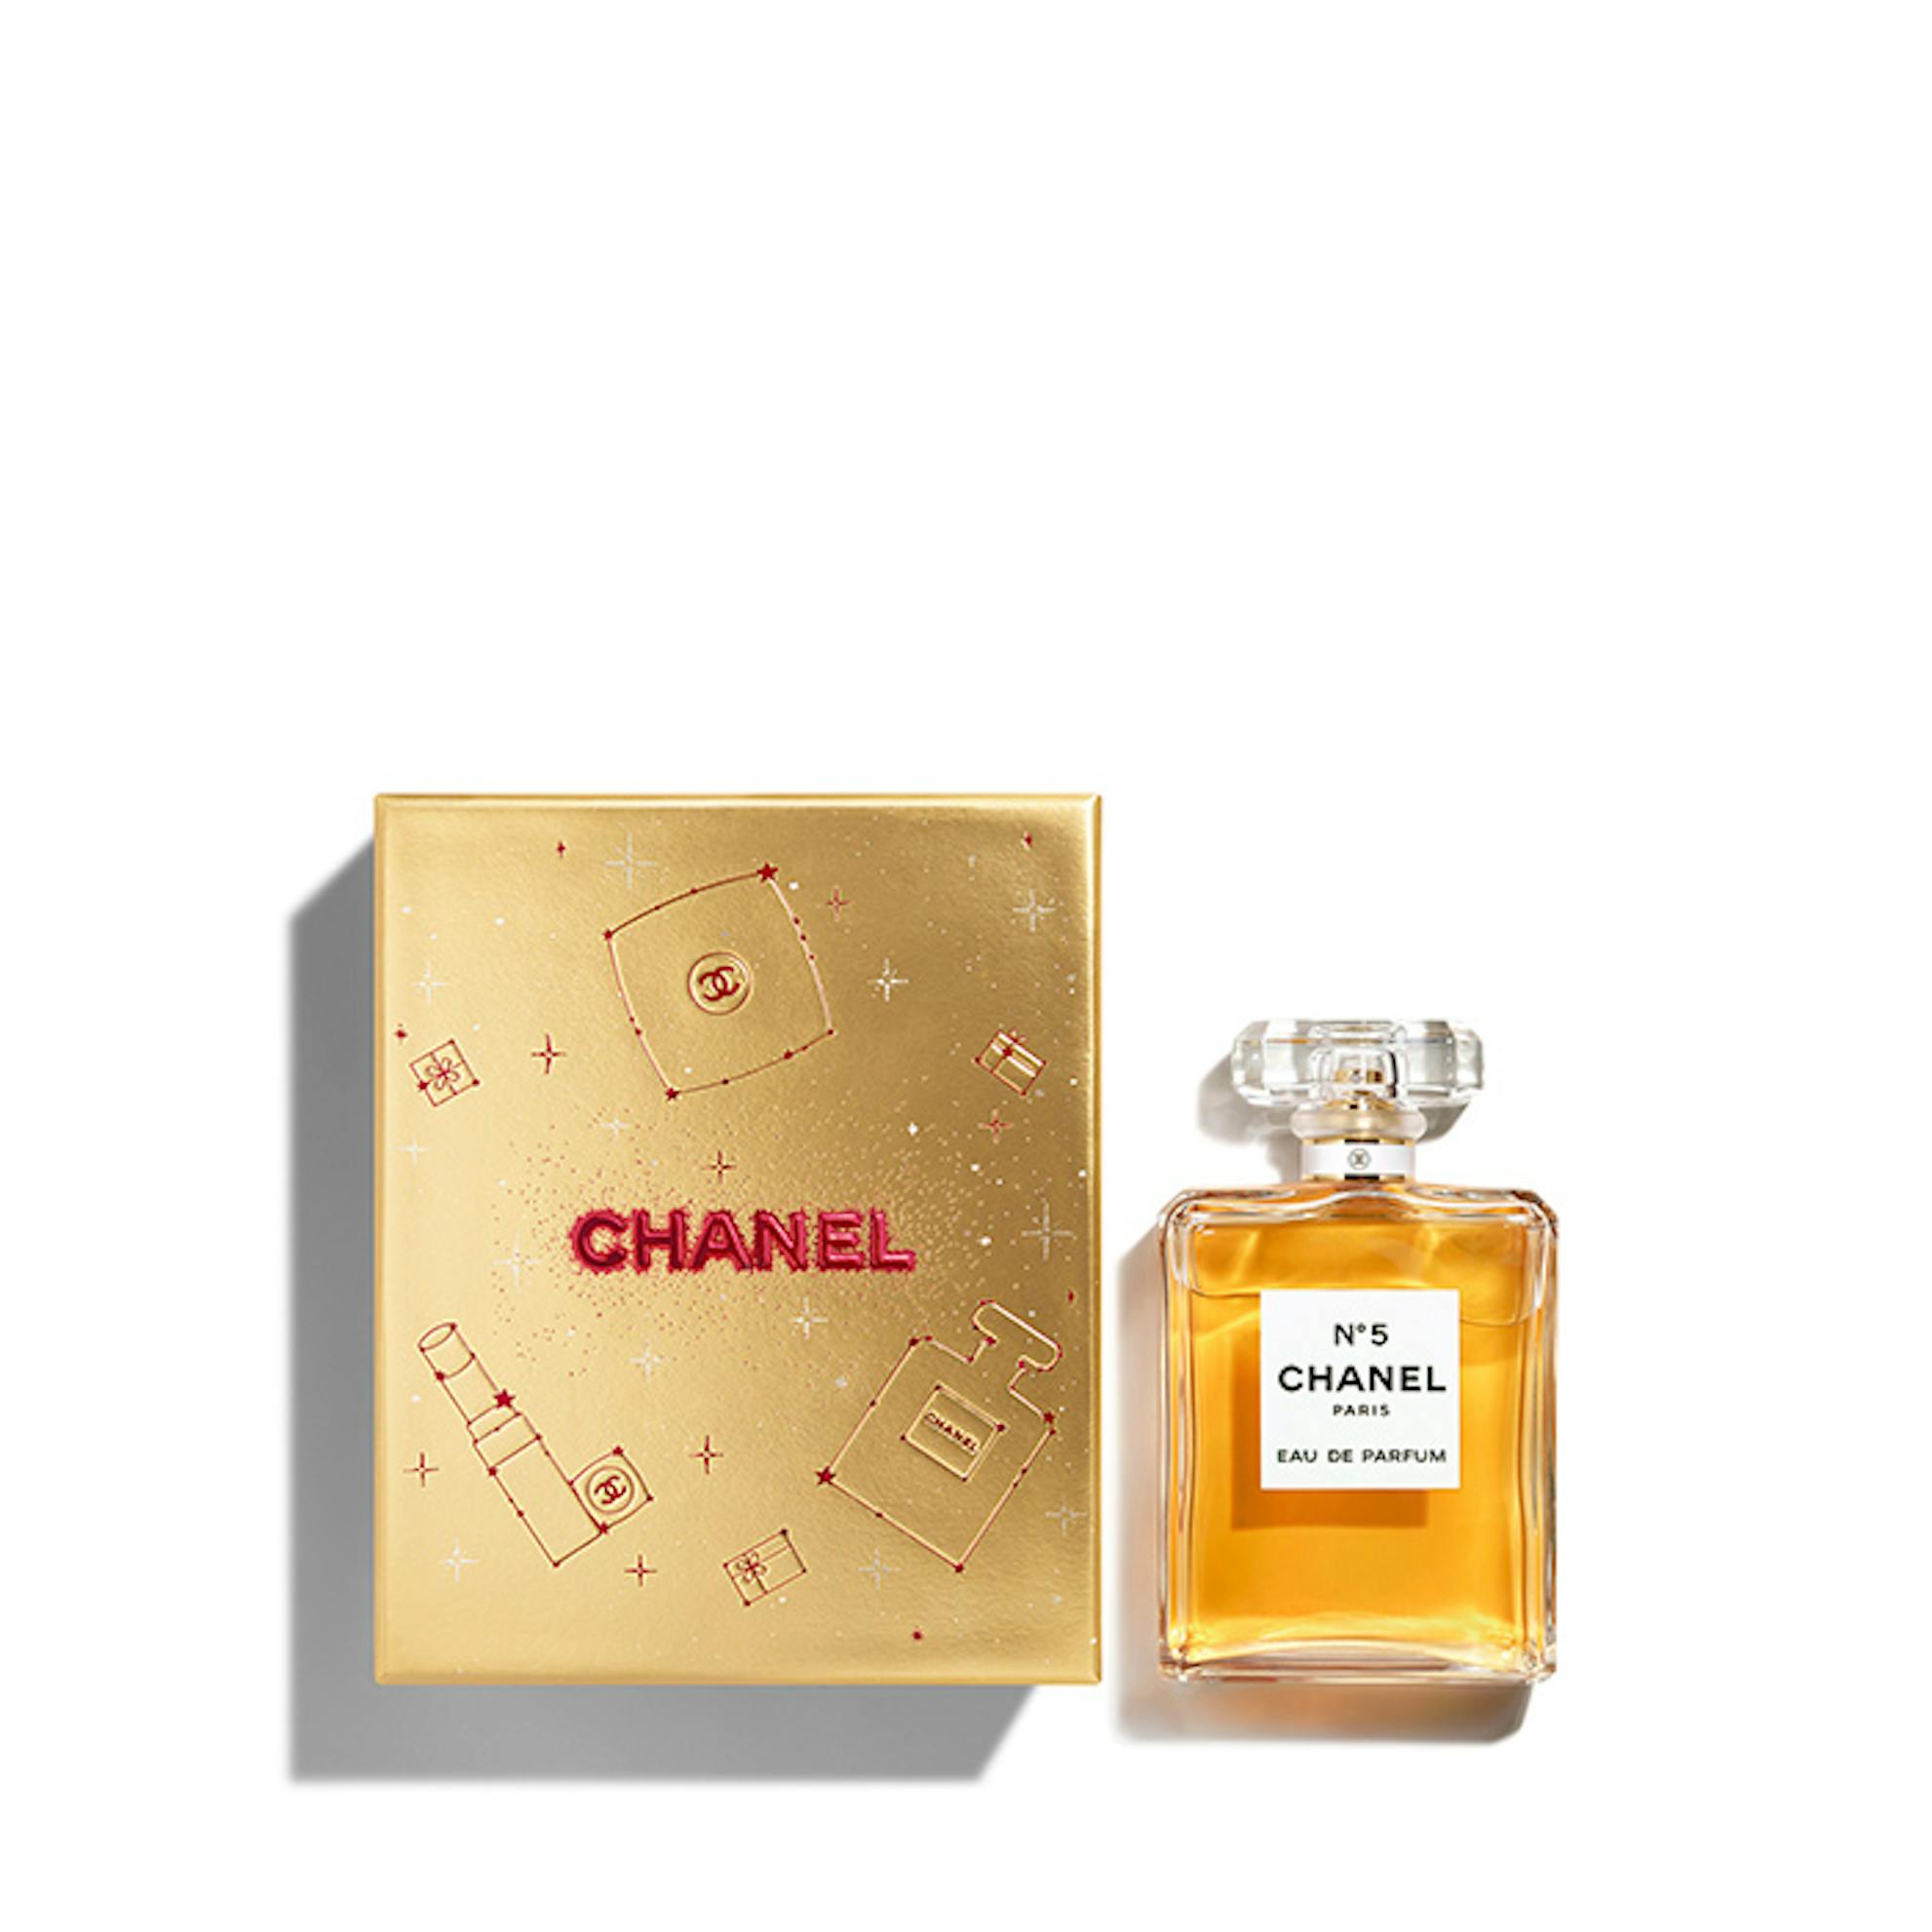 Chanel No.5 Eau De Toilette Purse Spray And 2 Refills (Limited